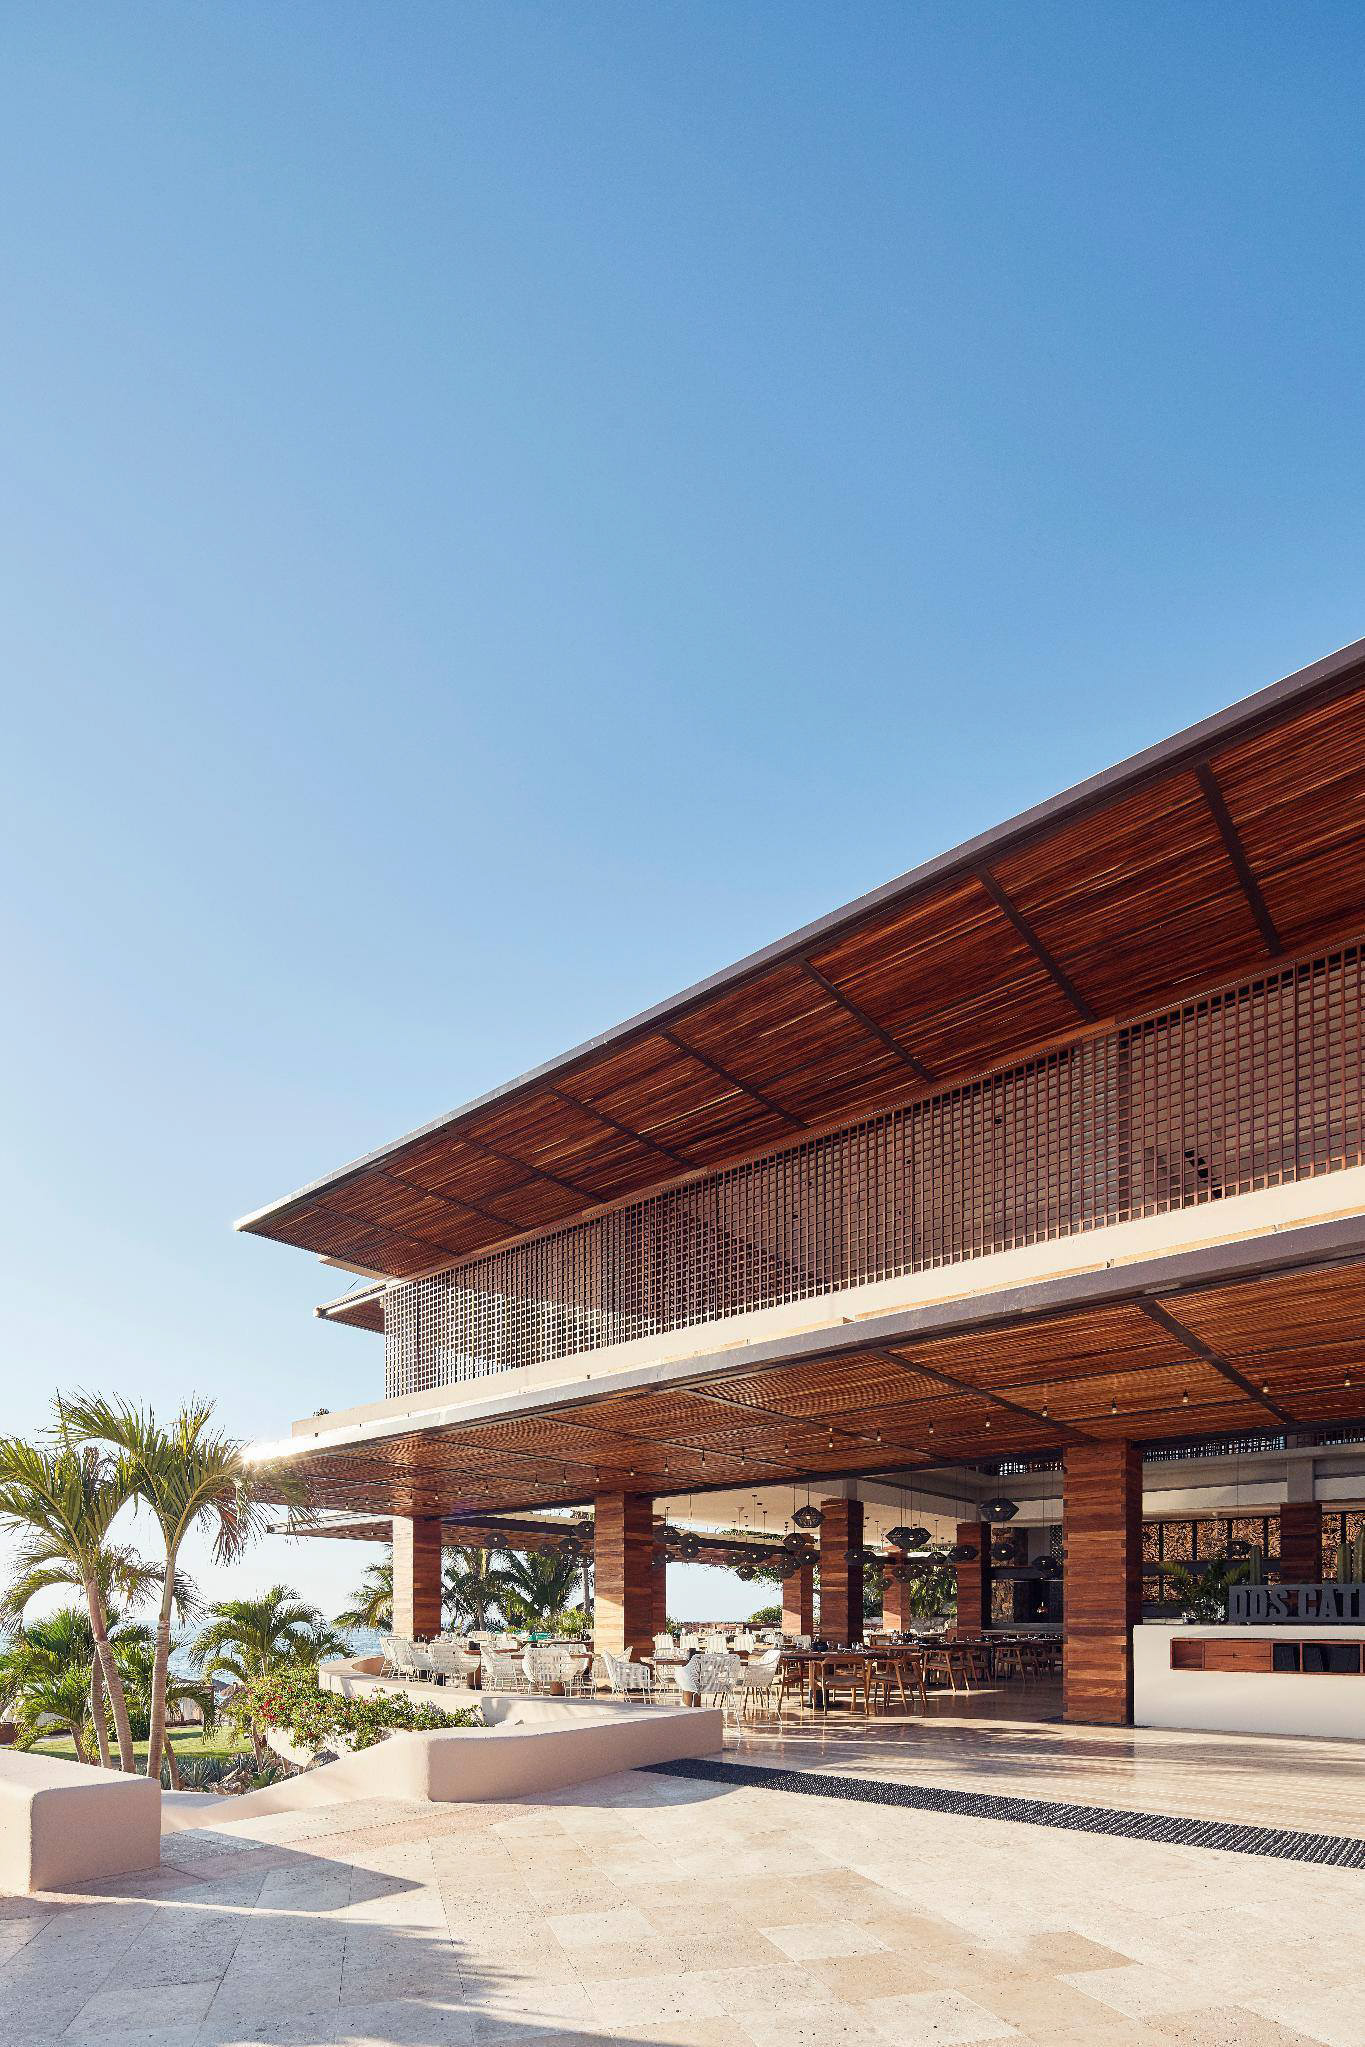 Four Seasons Resort Punta Mita – Nayarit, Mexico – Ocean View Restaurant